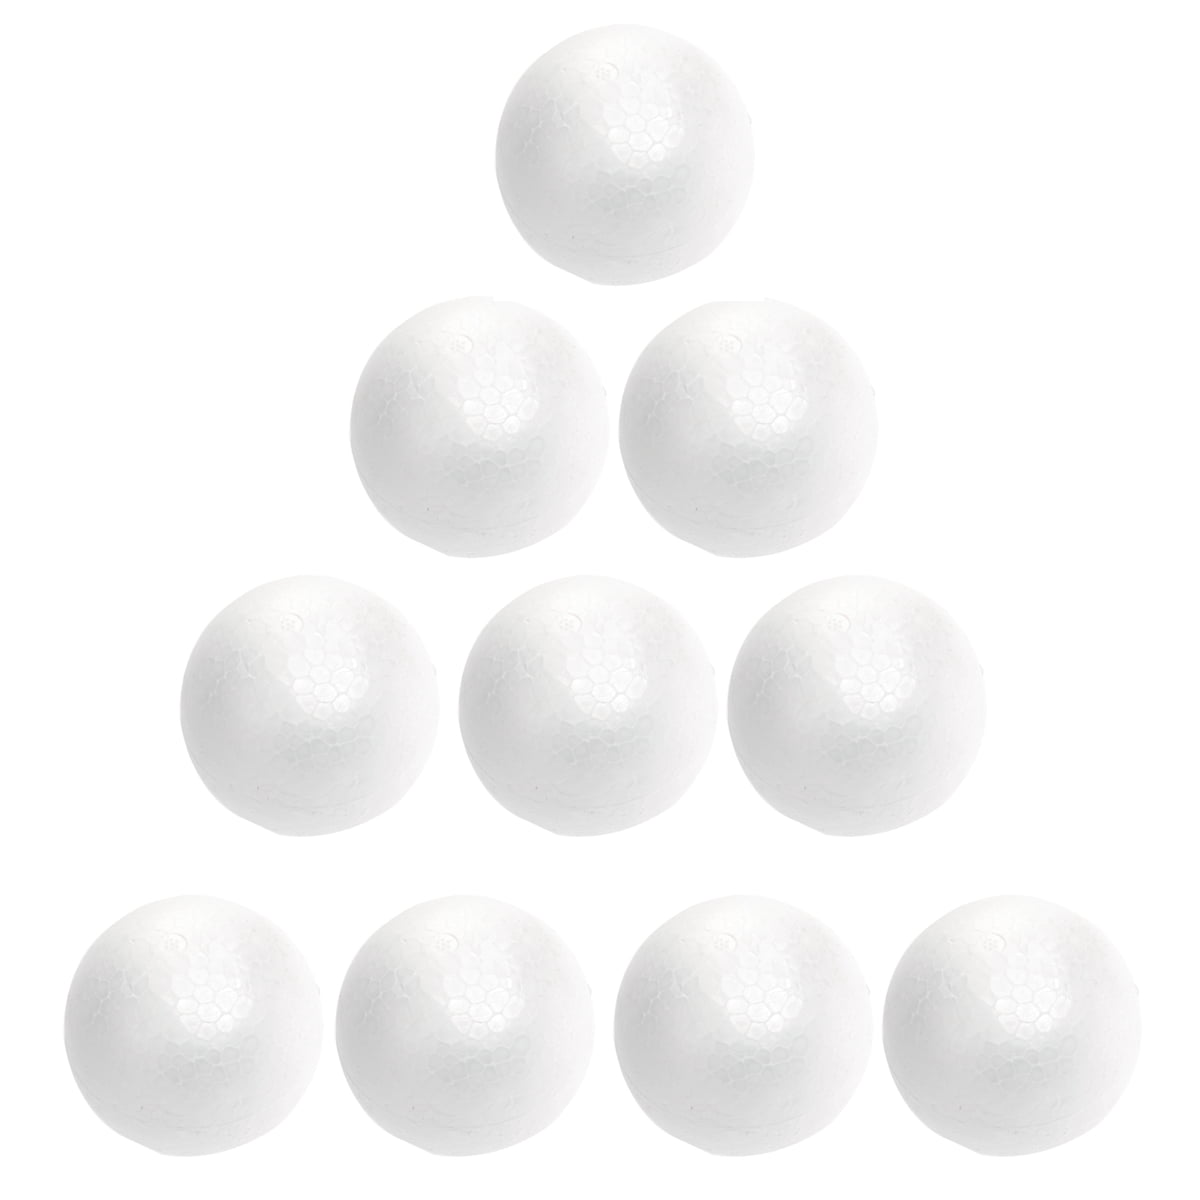 10pcs 8cm White Modelling Craft Polystyrene Foam Balls Spheres